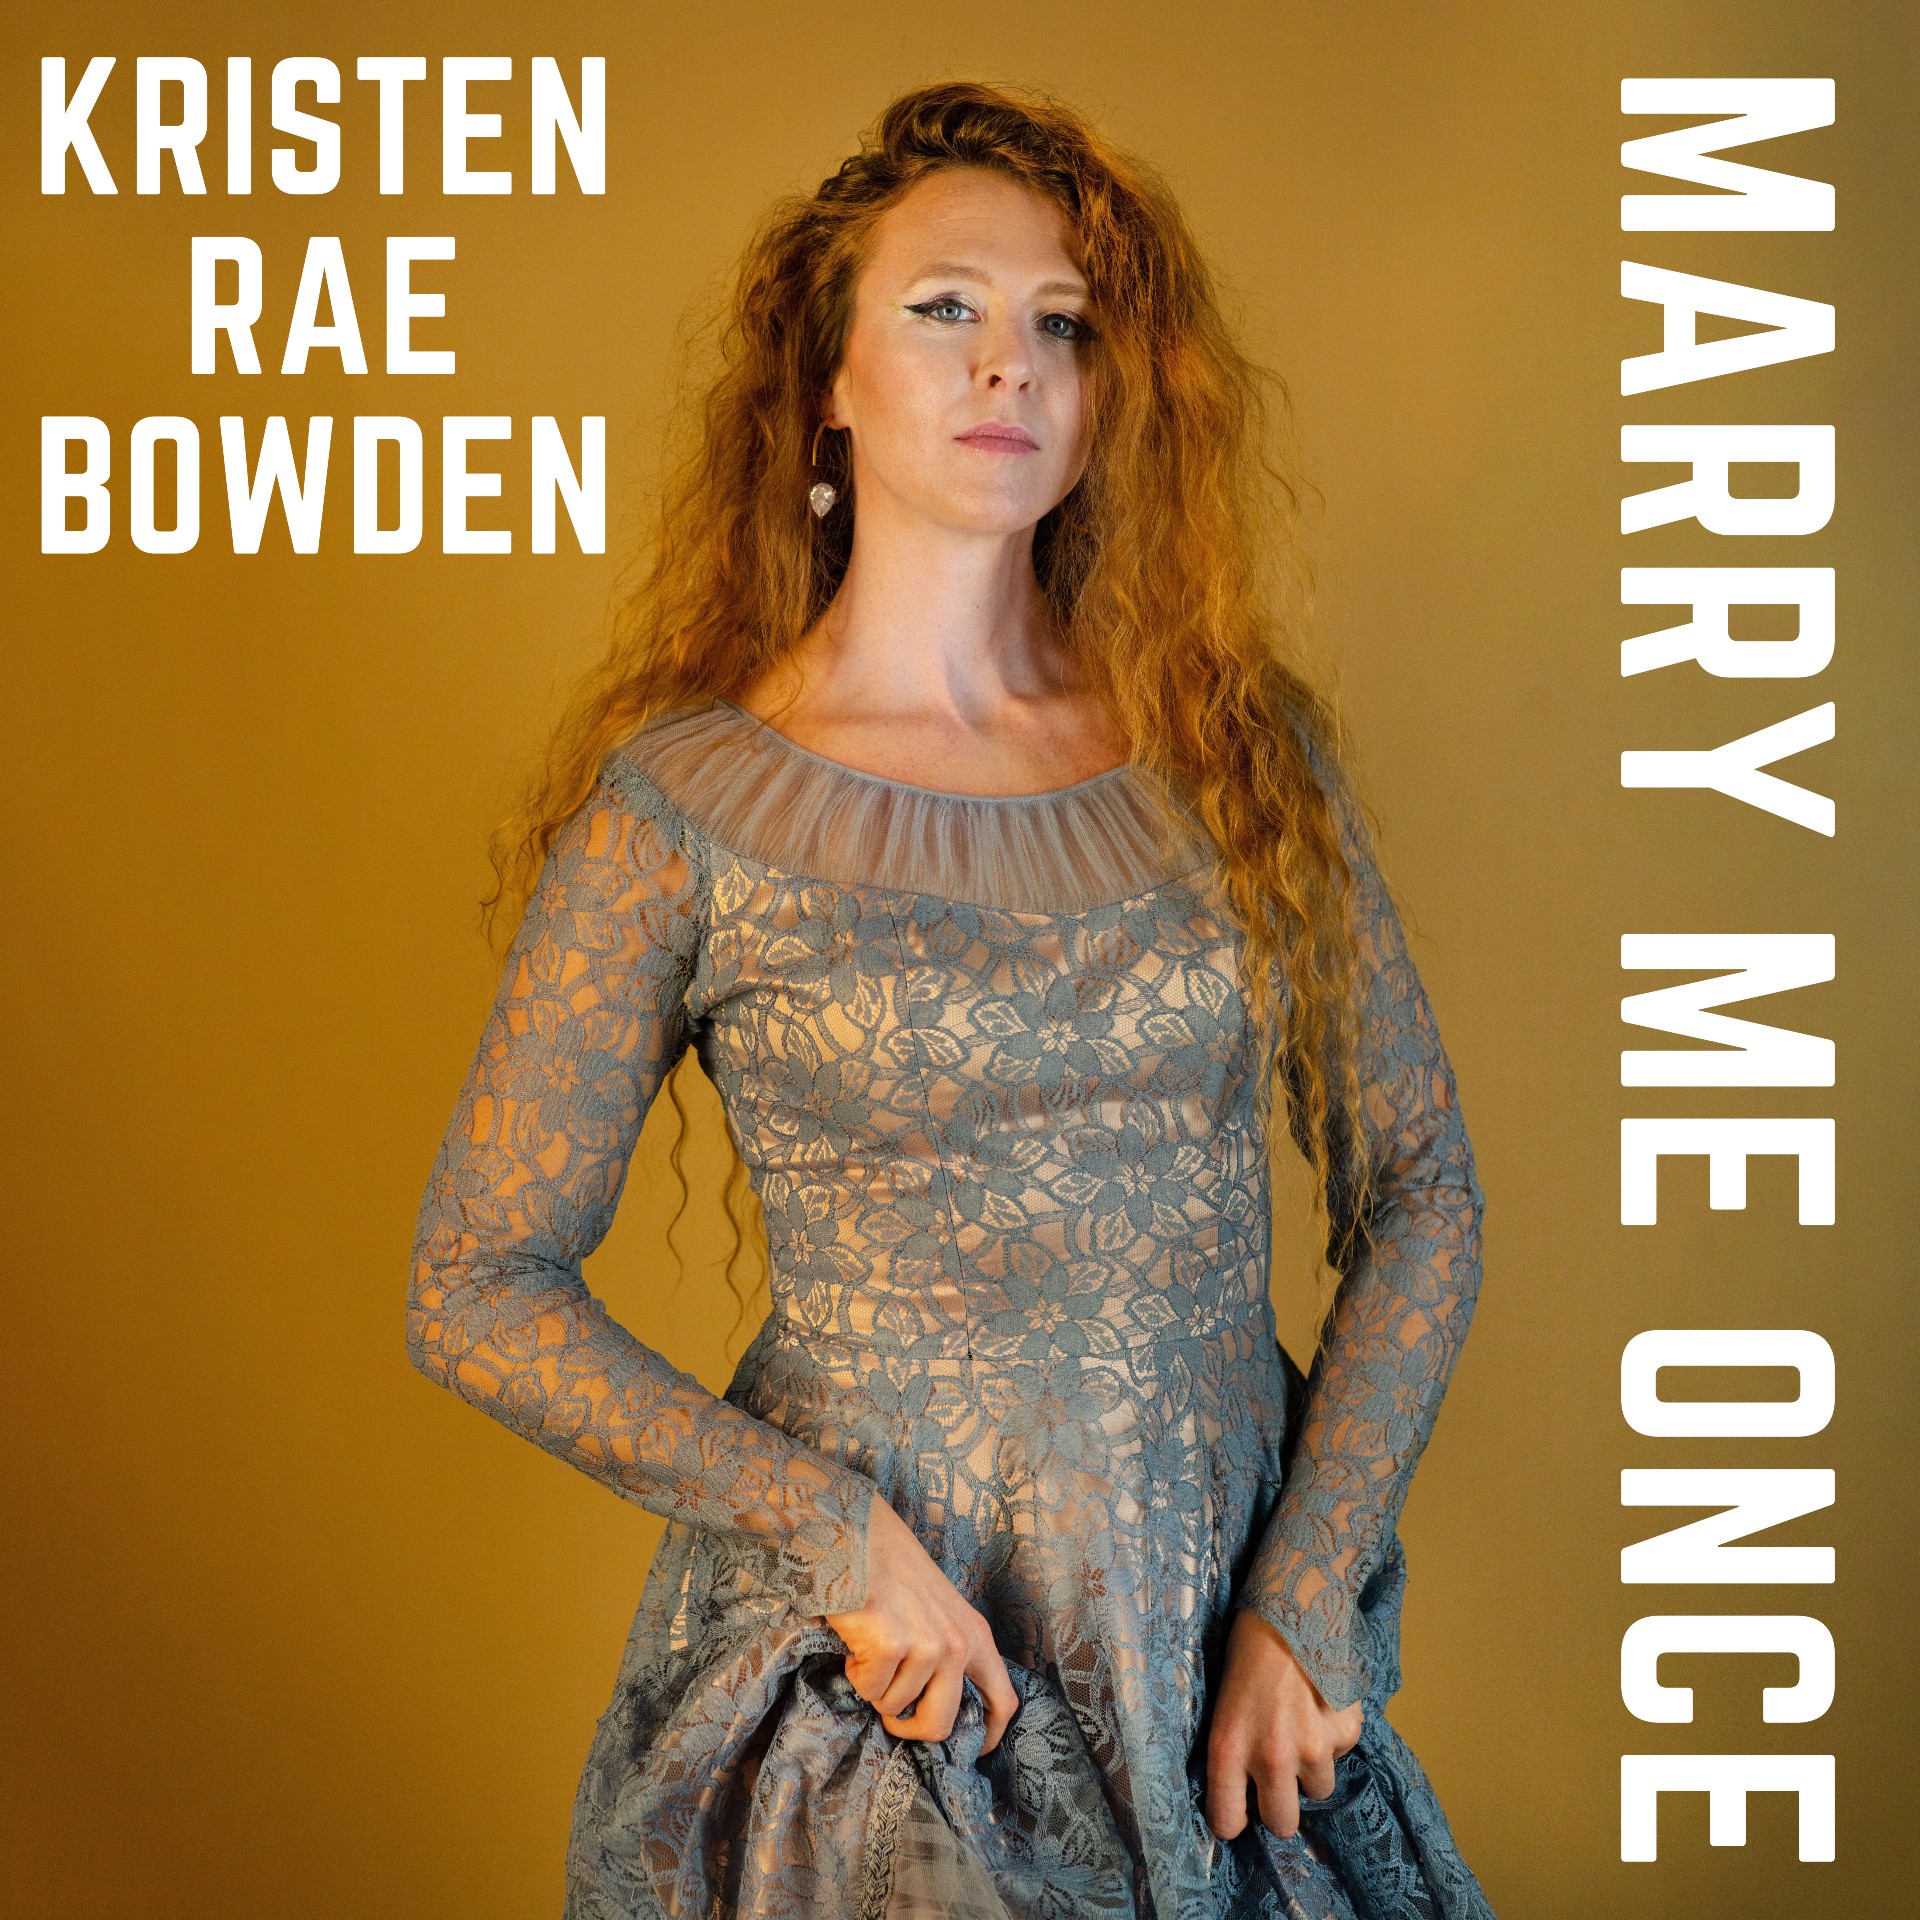 Kristen Rae Bowden “Marry Me Once” single artwork